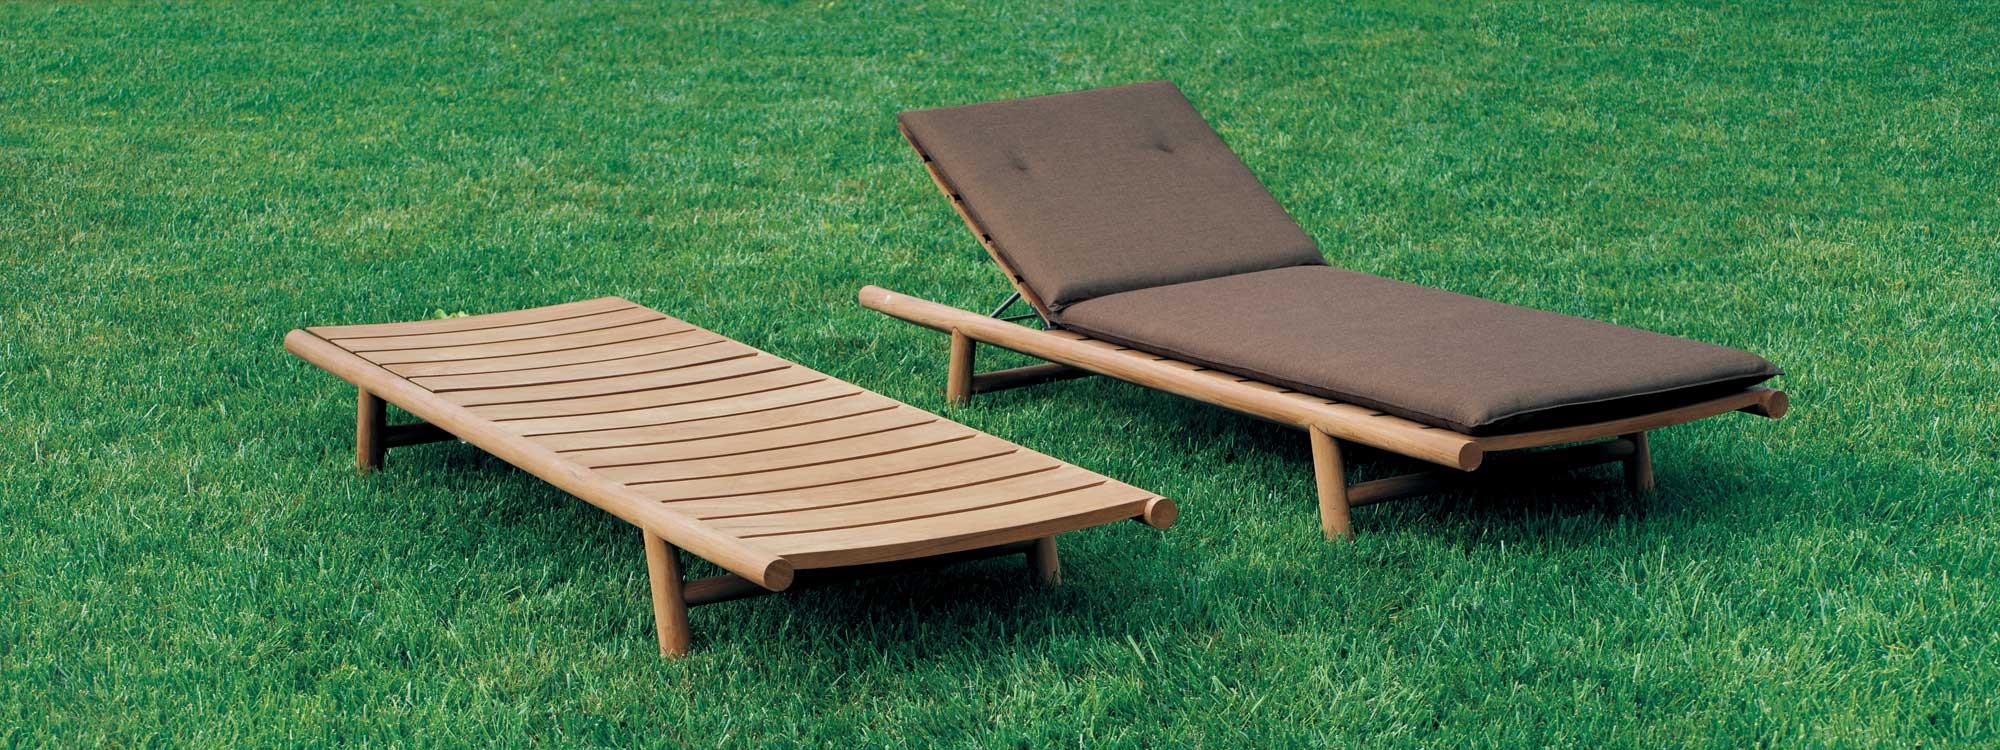 Image of RODA Orson teak sun beds showing ergonomically contoured teak slats of seat and back